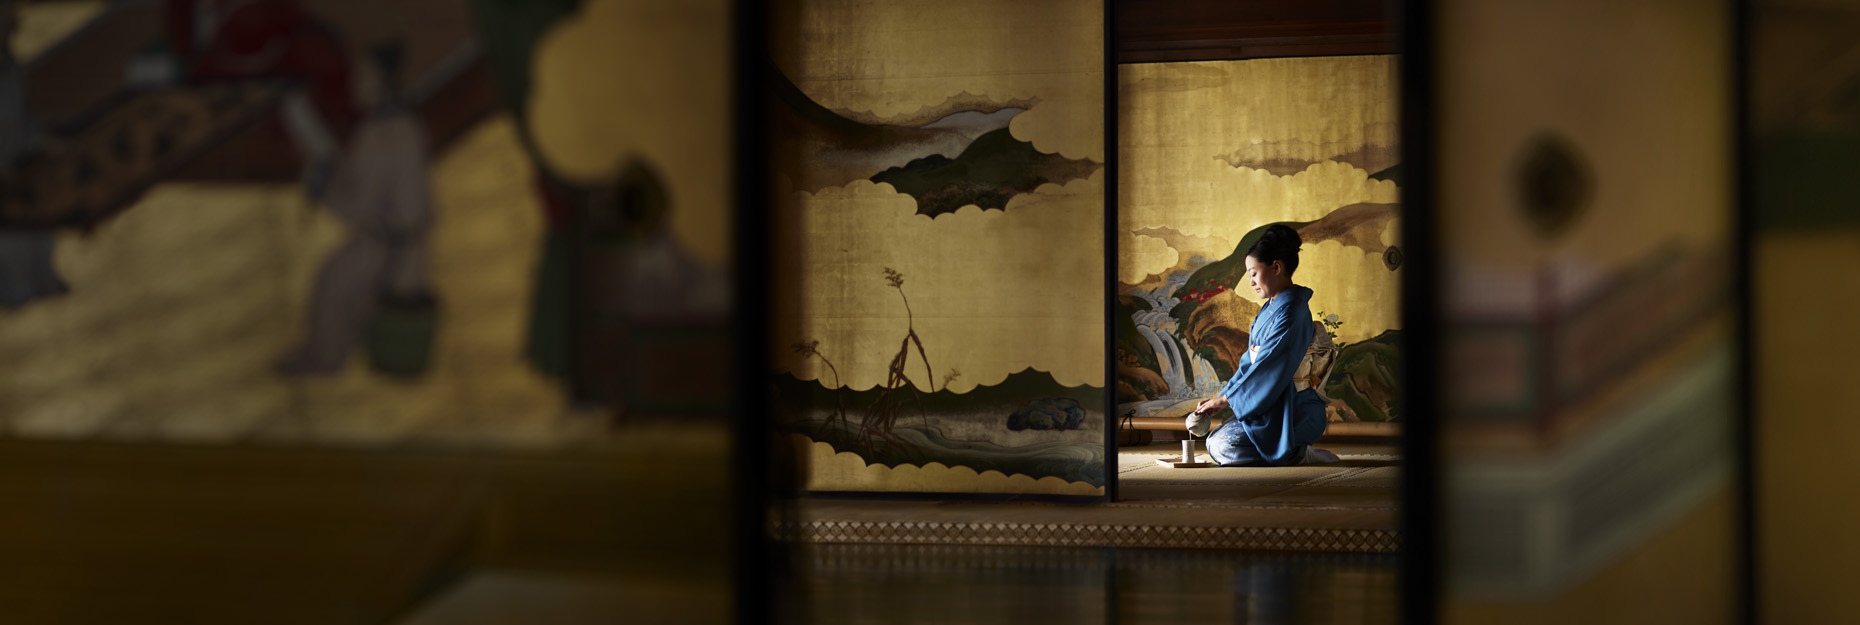 A traditional tea ceremony at The Ritz-Carlton, Kyoto | Japan |